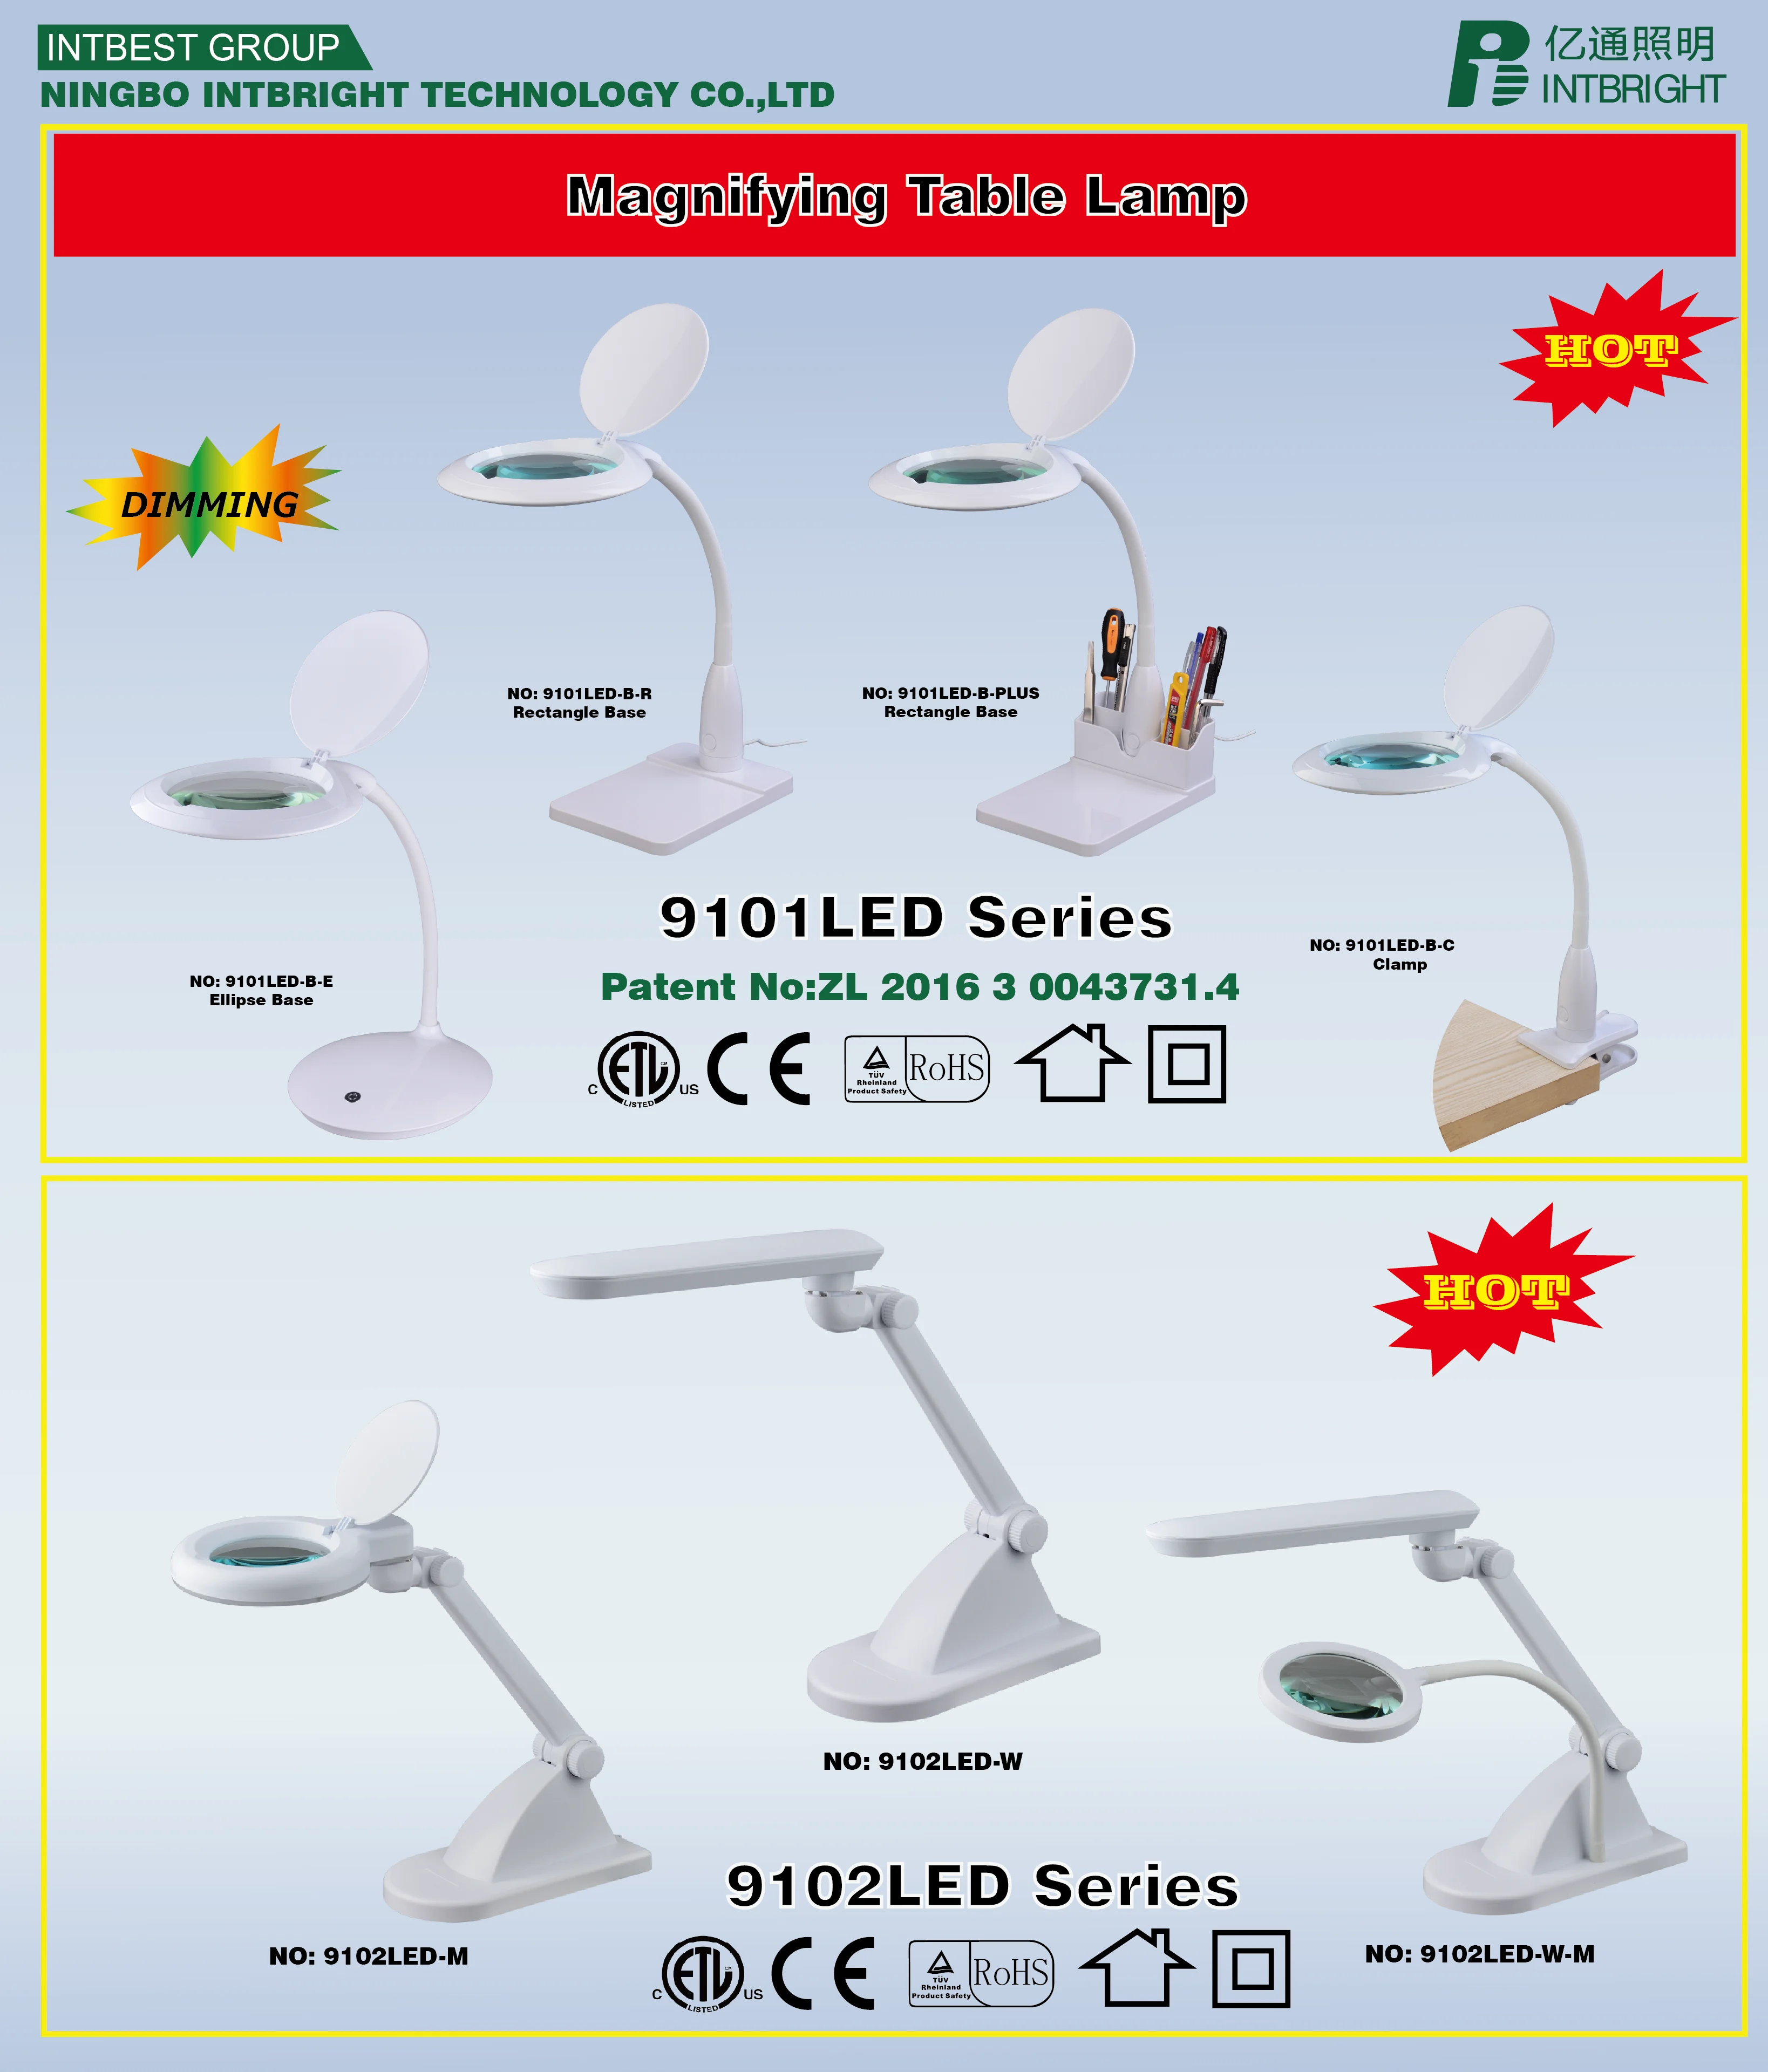 Table Lamp Series.png